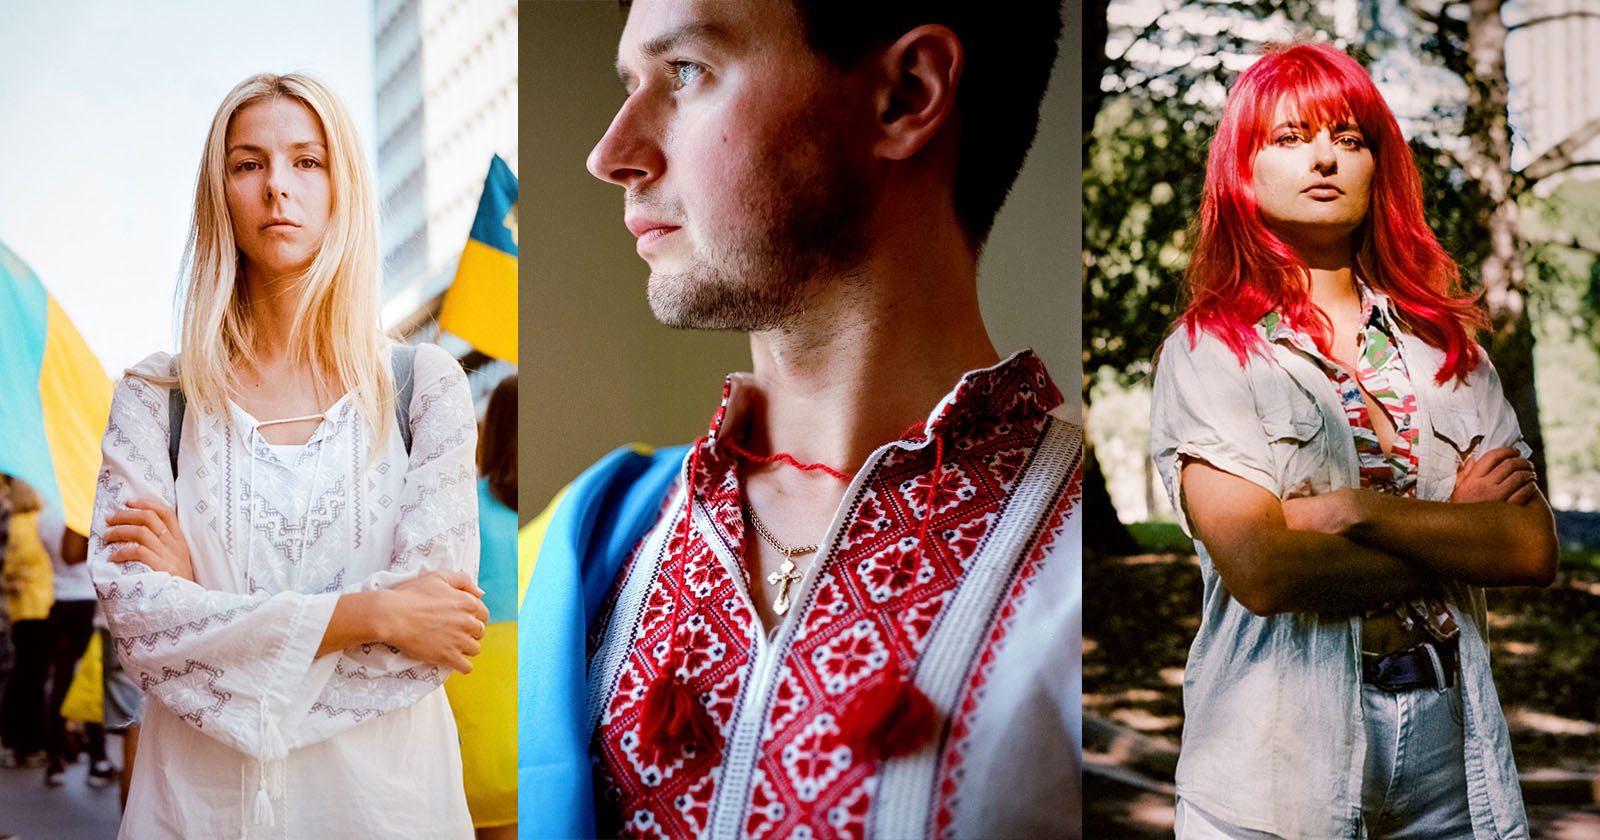  photojournalist intimate view ukrainians living sydney 